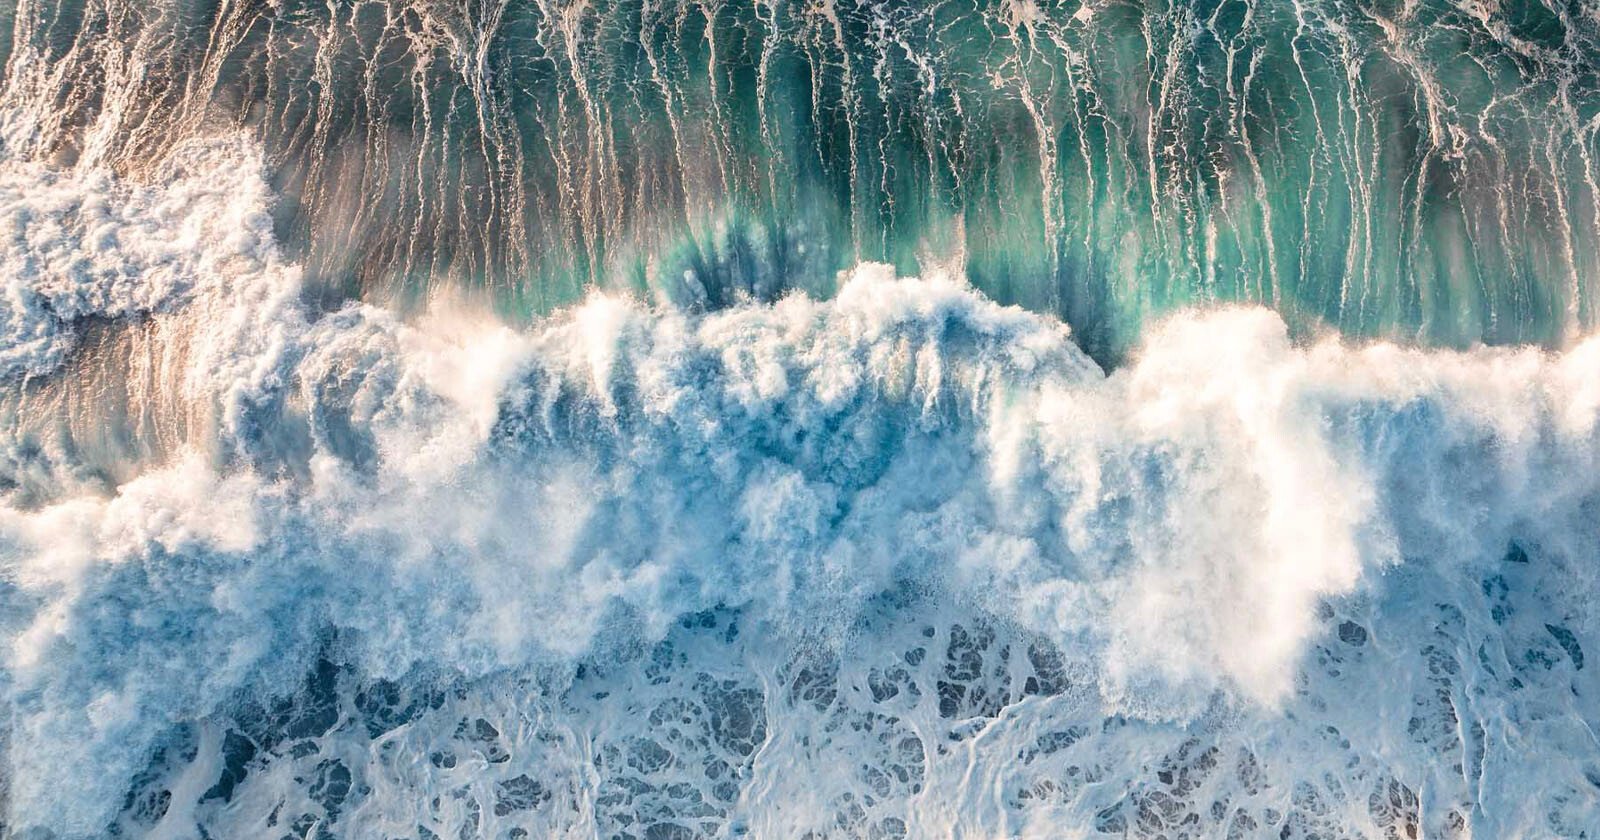  photographer creative way shooting hawaii most powerful waves 